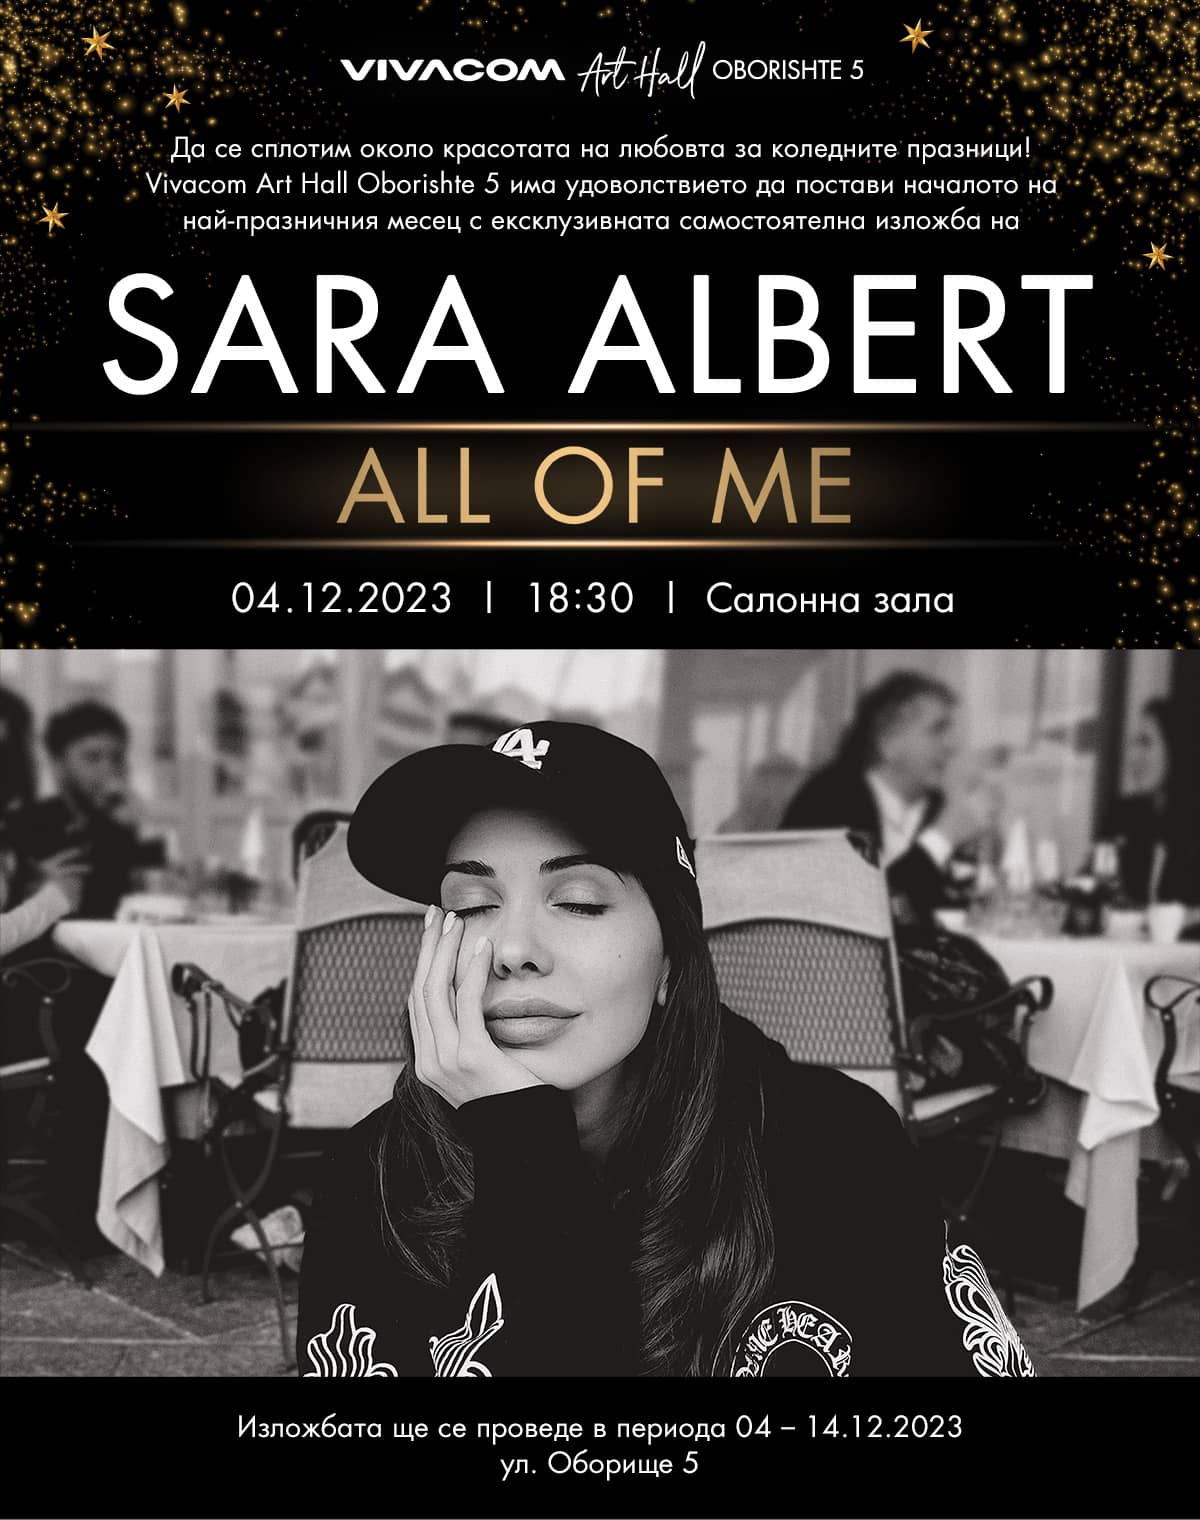 Sara Albert invitation ALL OF ME